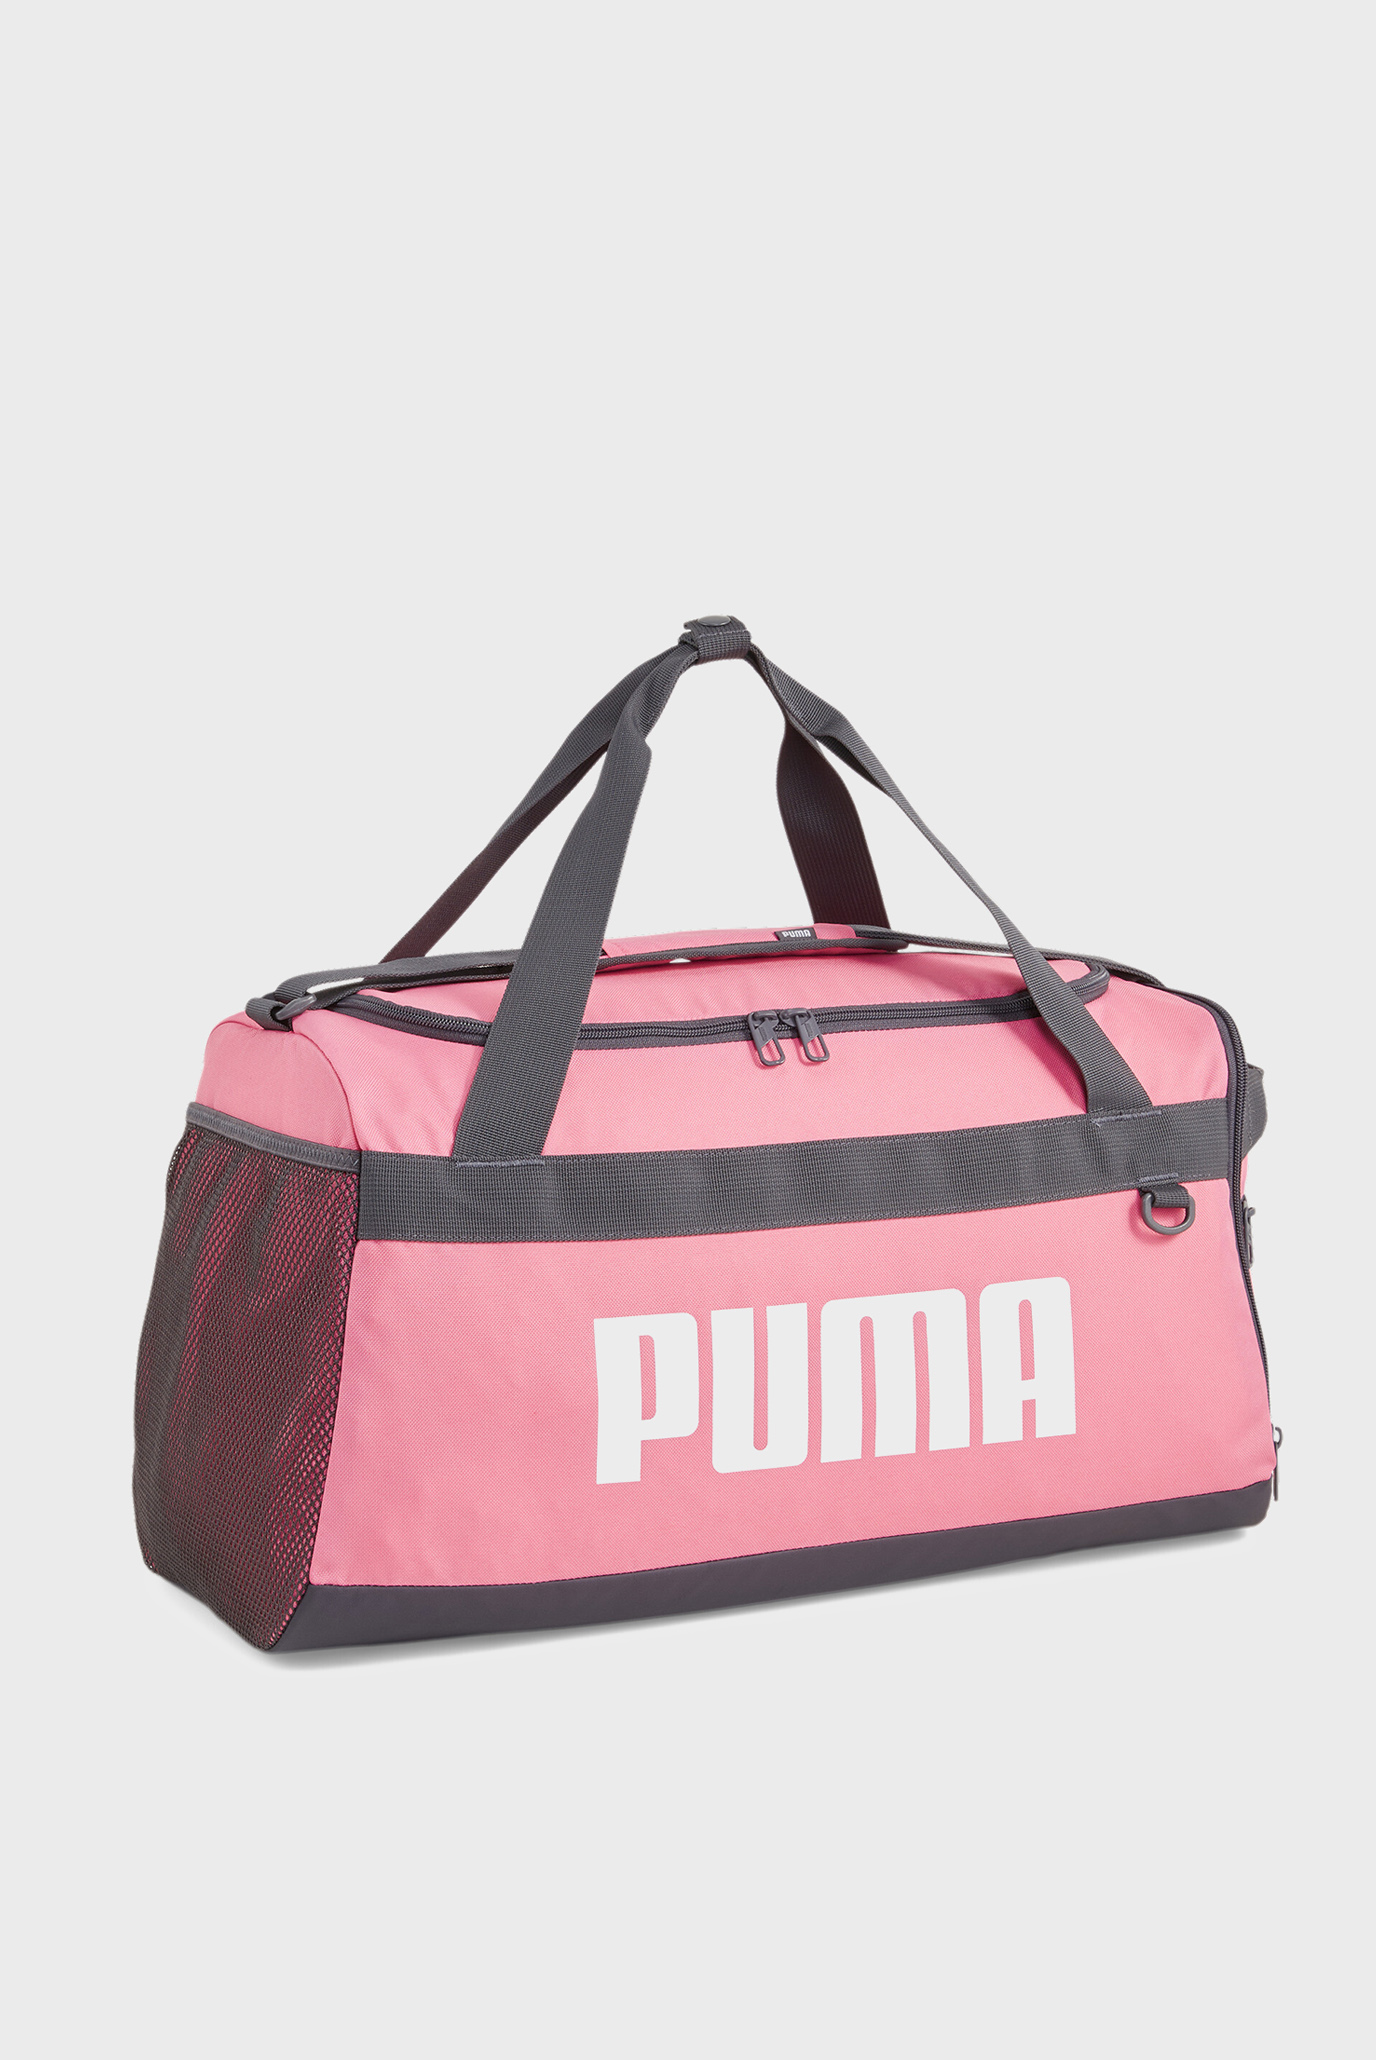 Рожева спортивна сумка Challenger S Duffle Bag рожева спортивна сумка Challenger S Duffle Bag 1